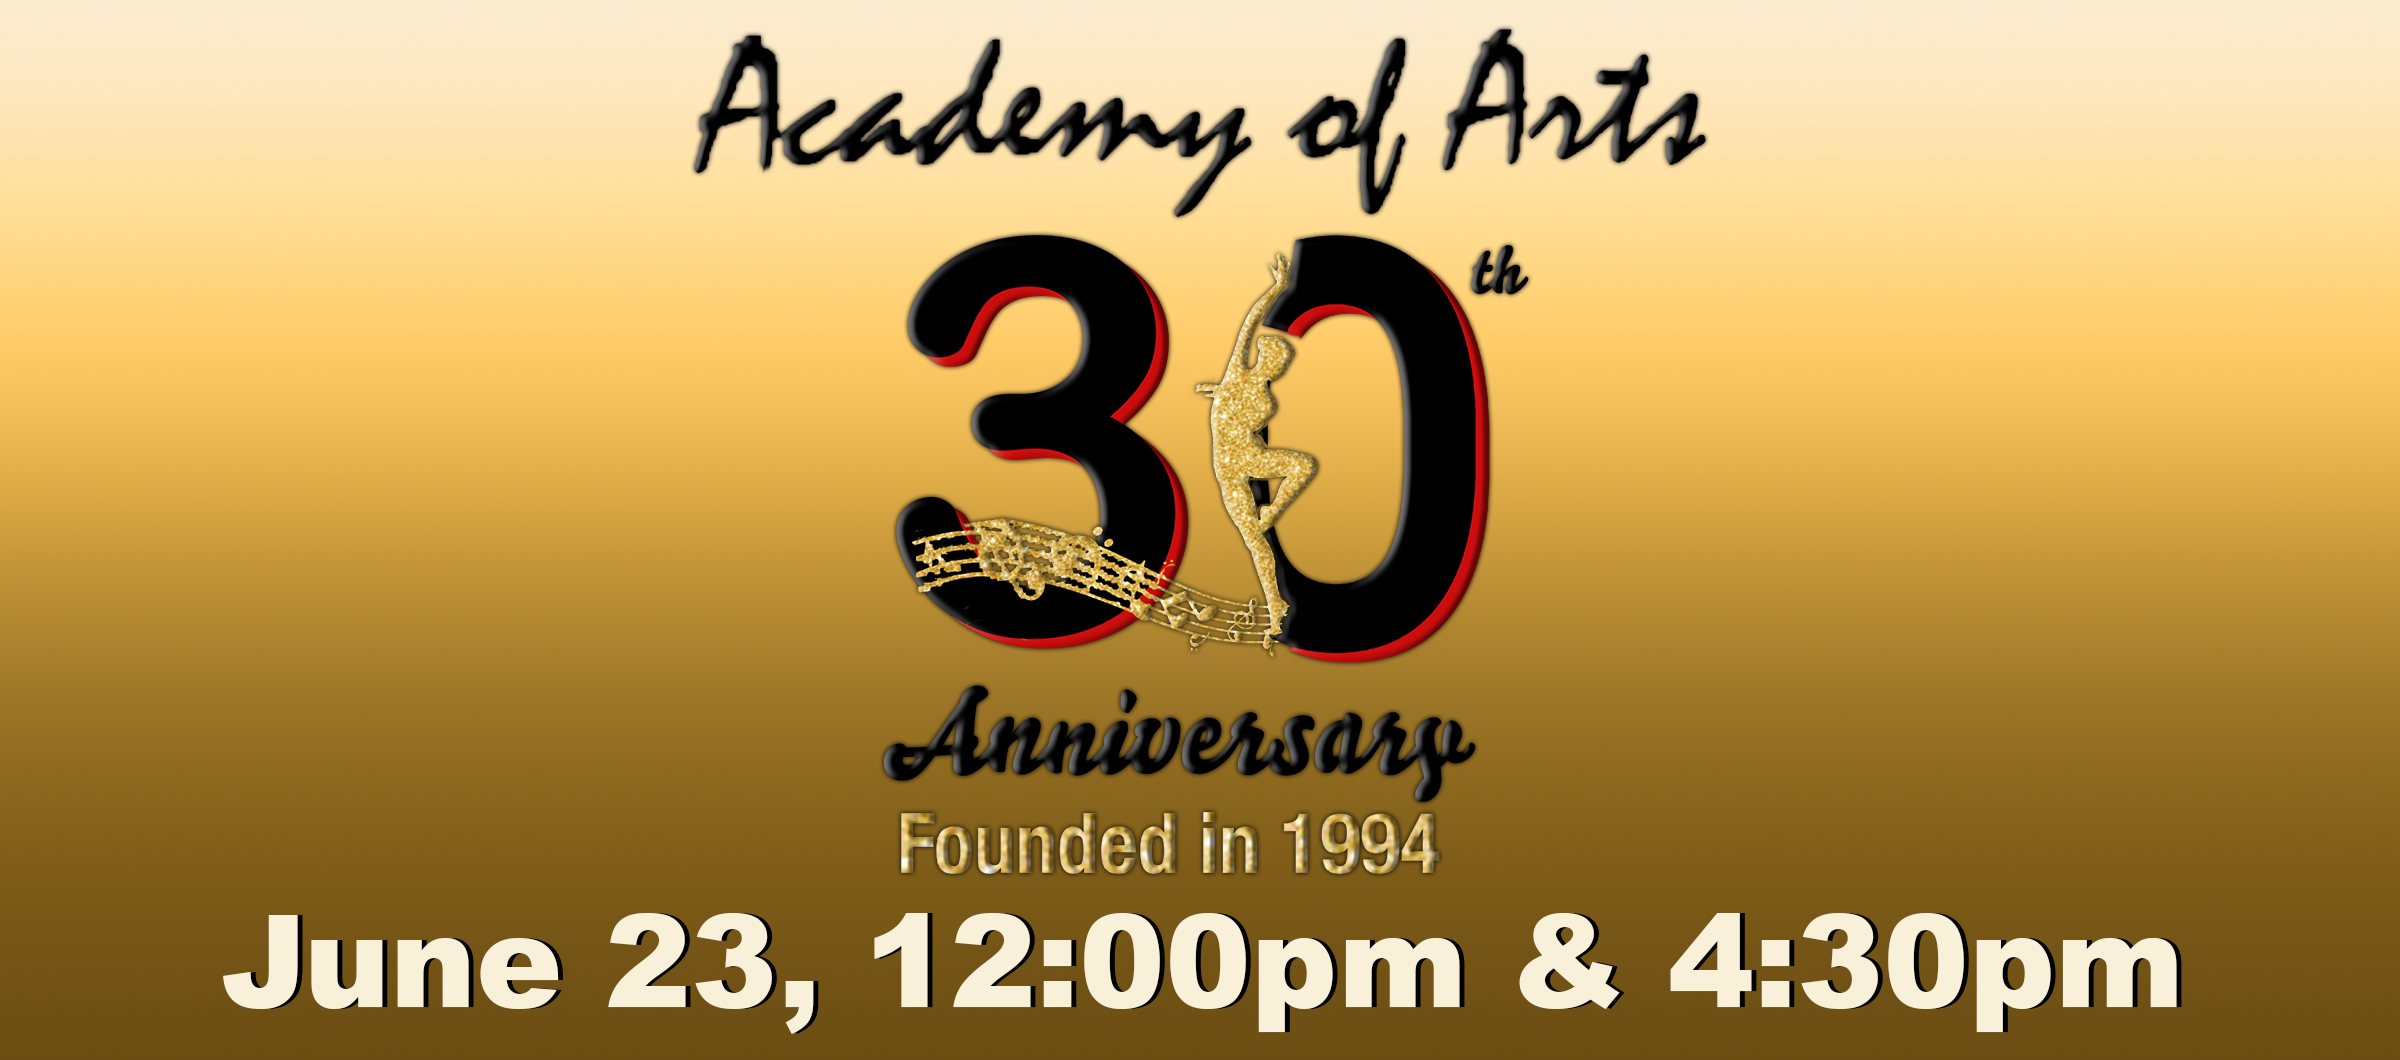 Academy of Arts 30th Year Anniversary